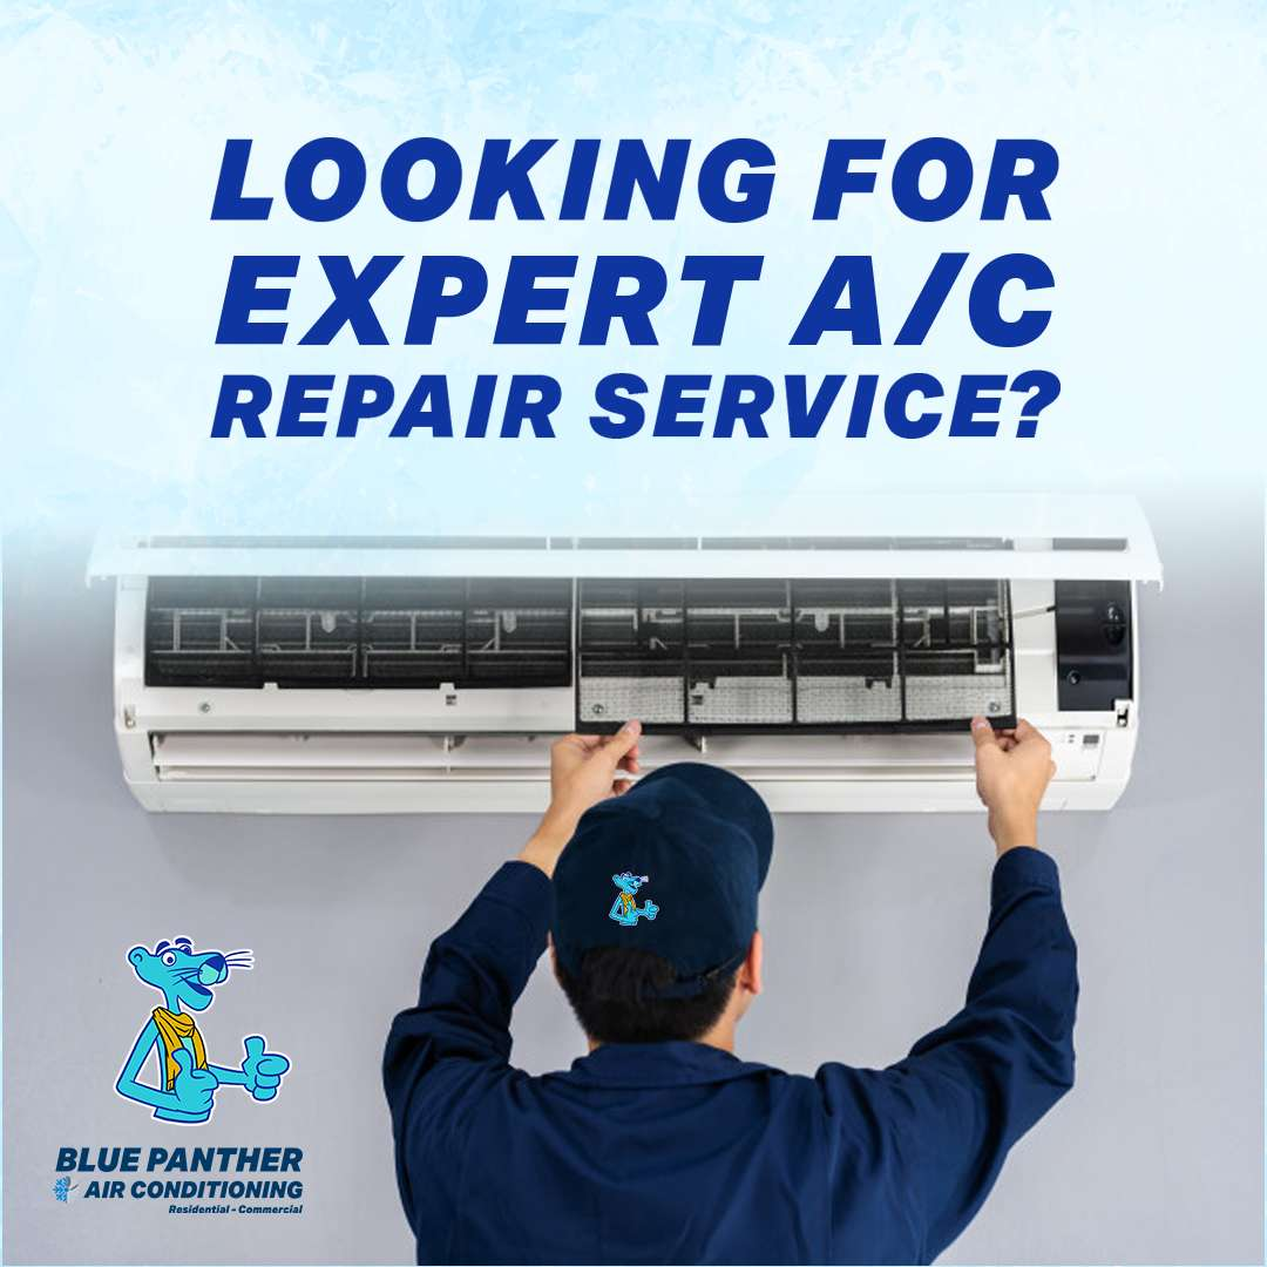 Expert A/C Repair Service